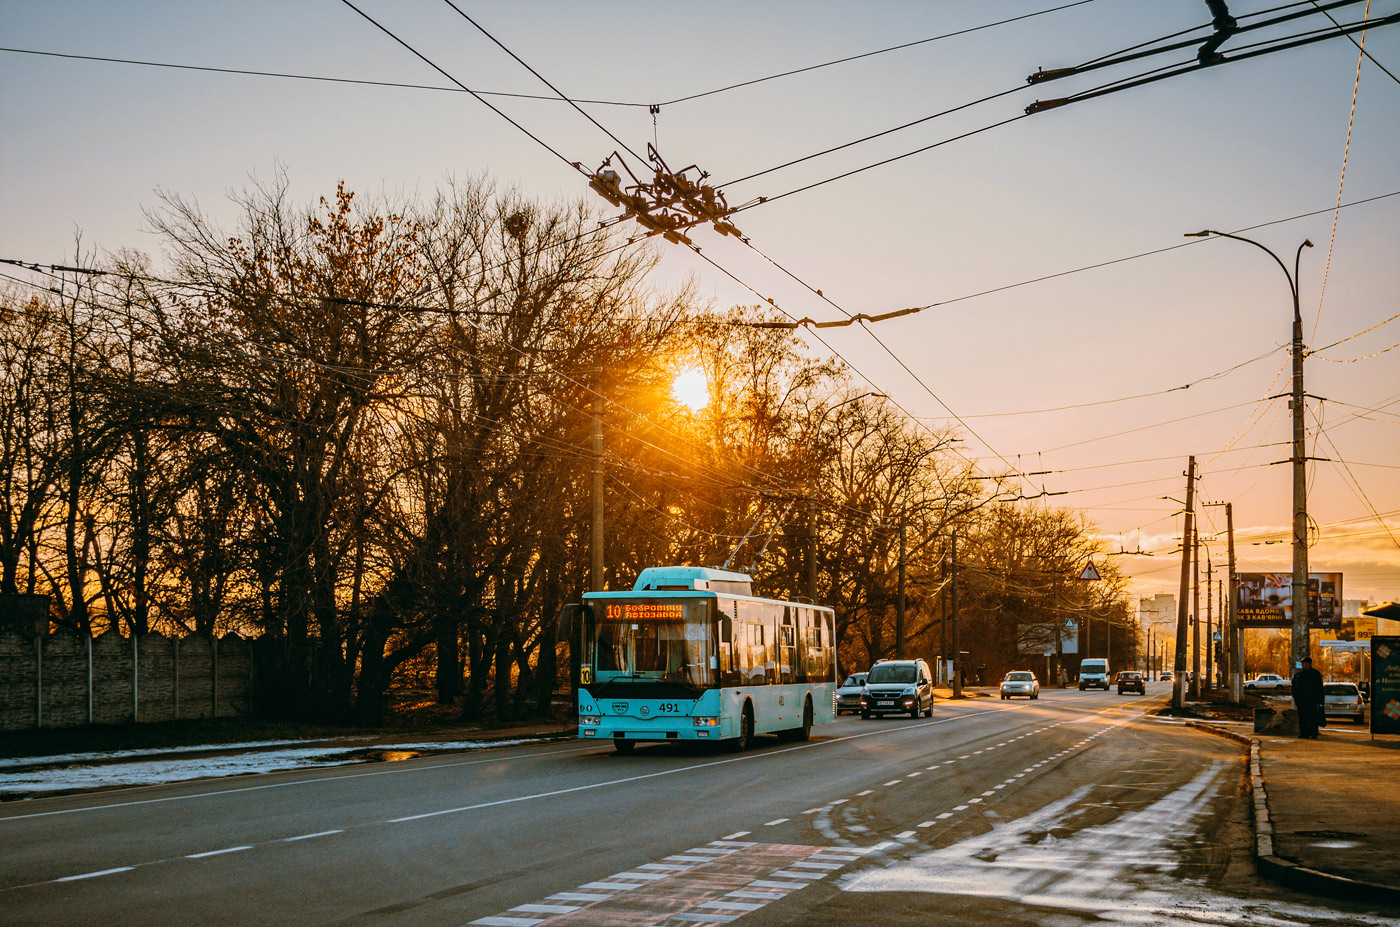 Csernyihiv, Etalon T12110 “Barvinok” — 491; Csernyihiv — Terminus stations; Csernyihiv — Trolleybus lines